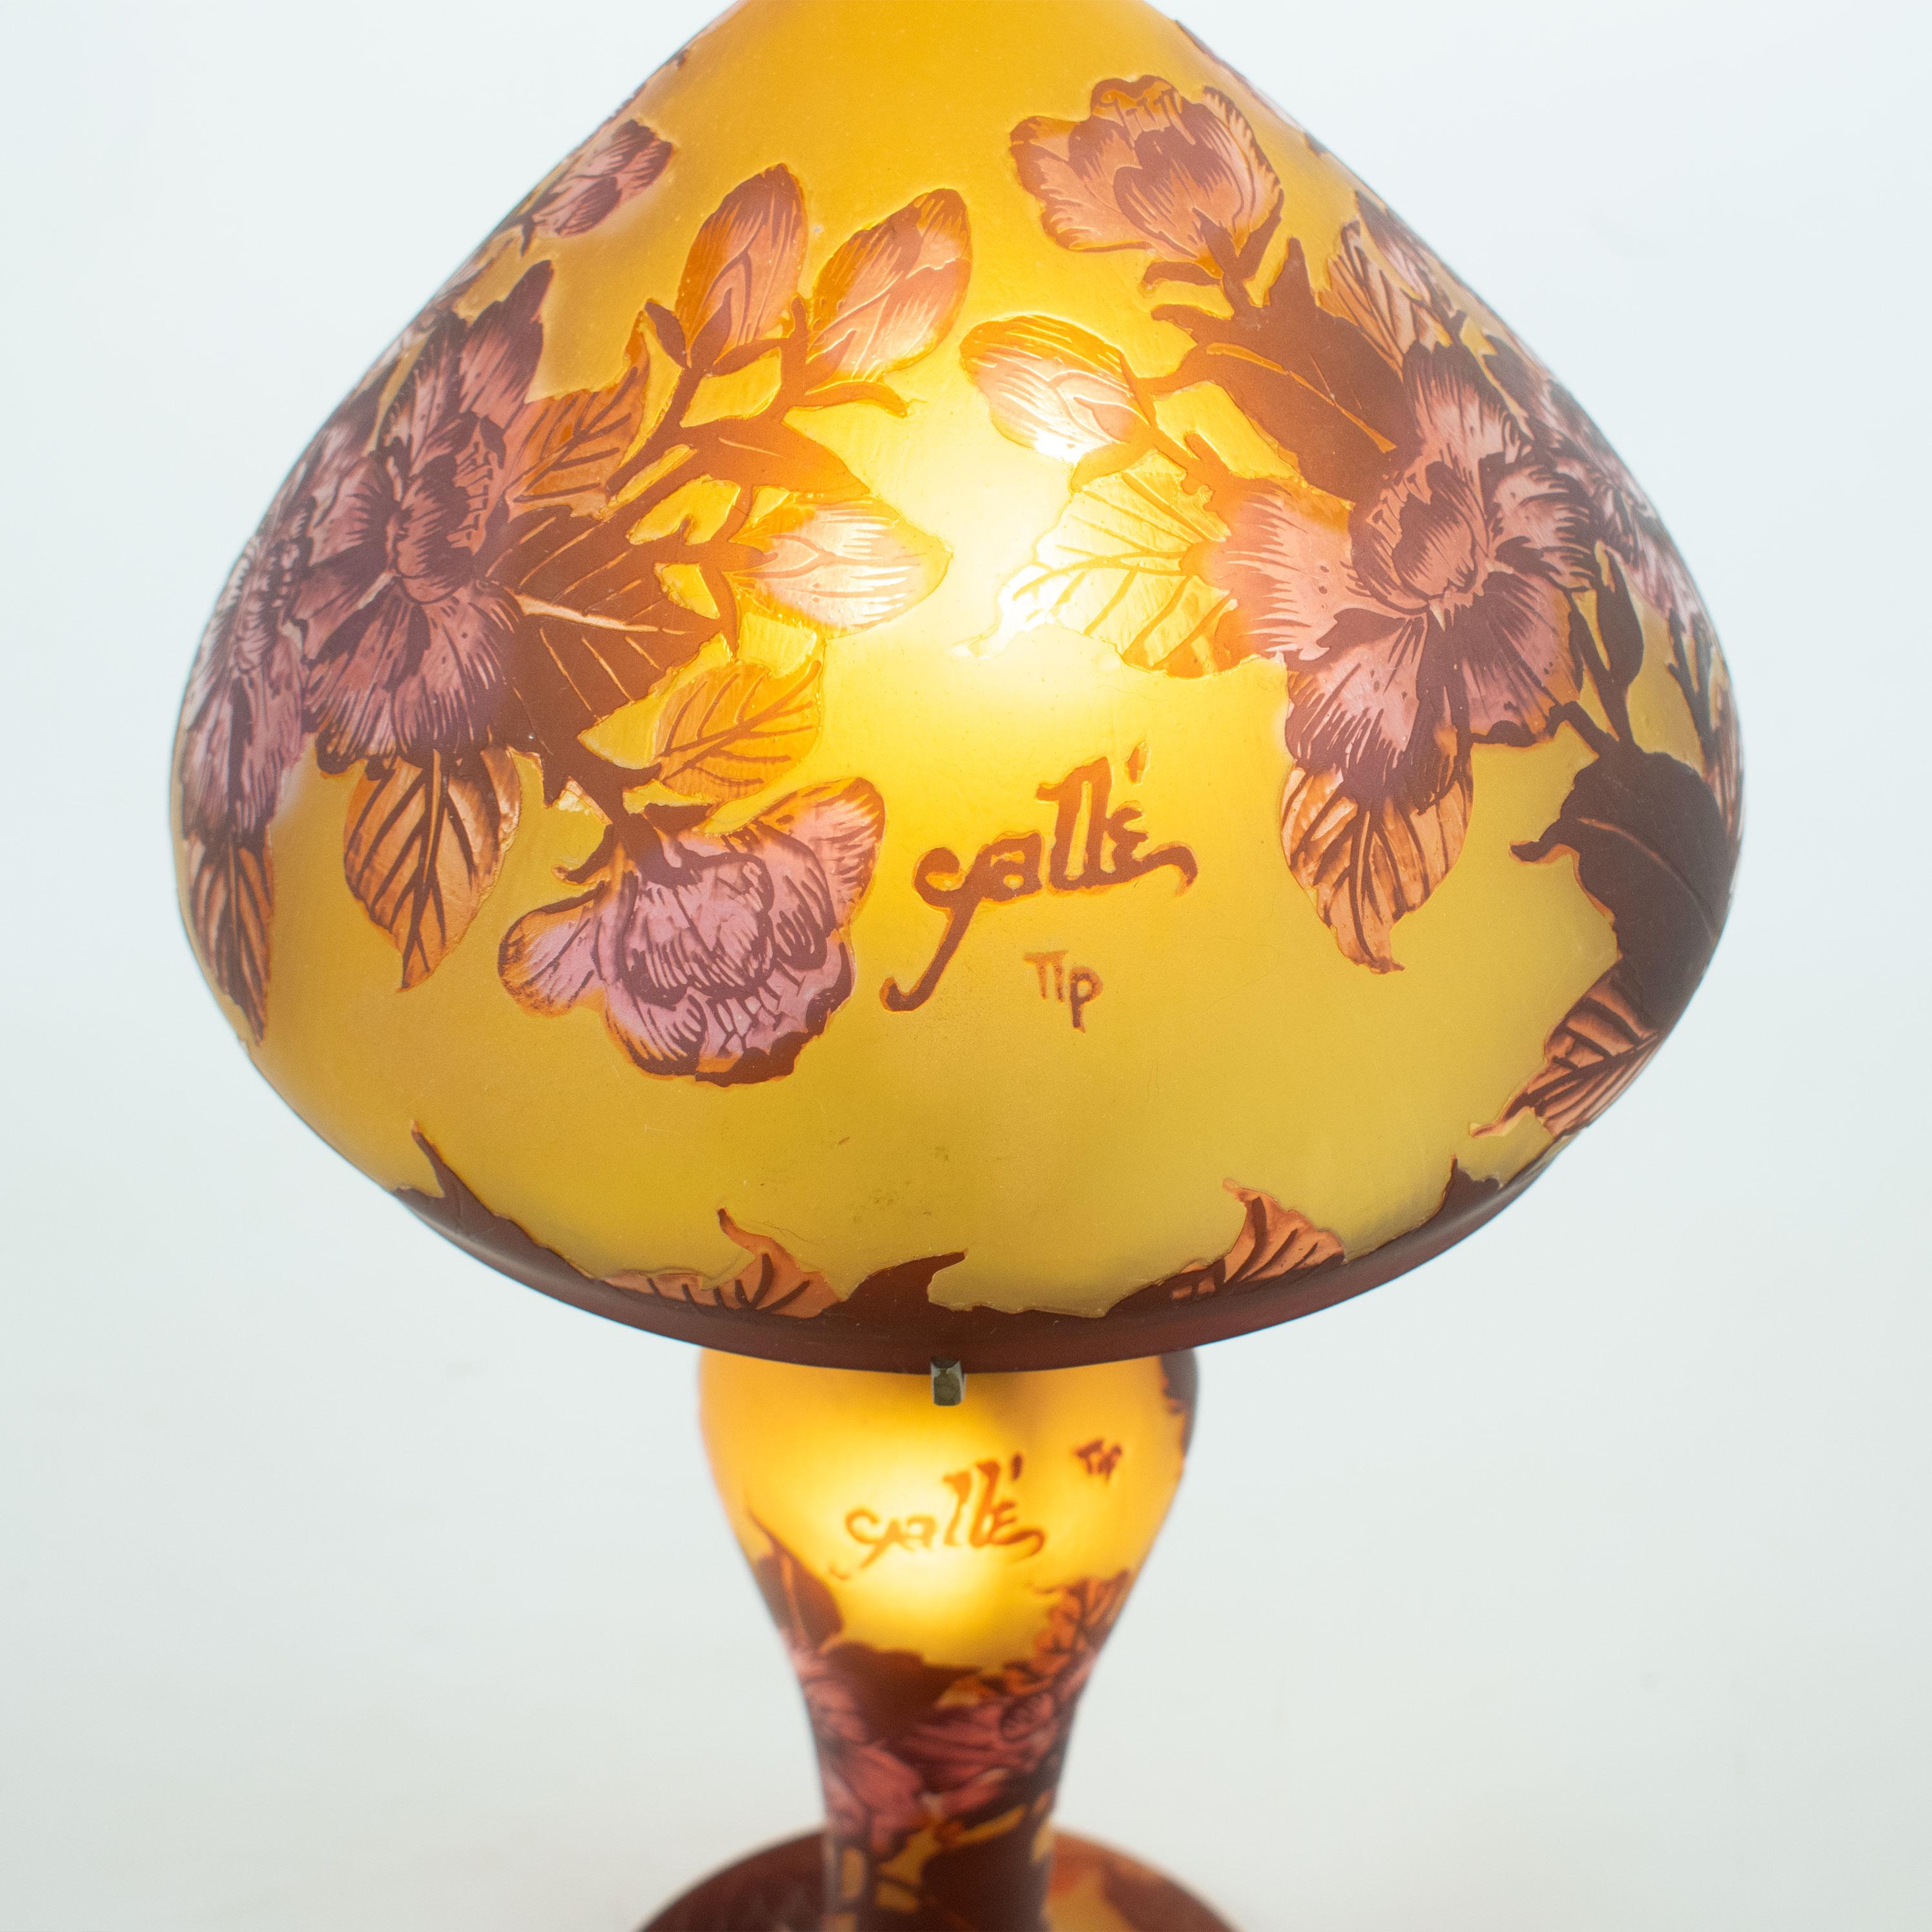 French Gallè Tip - Art Nouveau Mushroom Lamp in multilayer glass